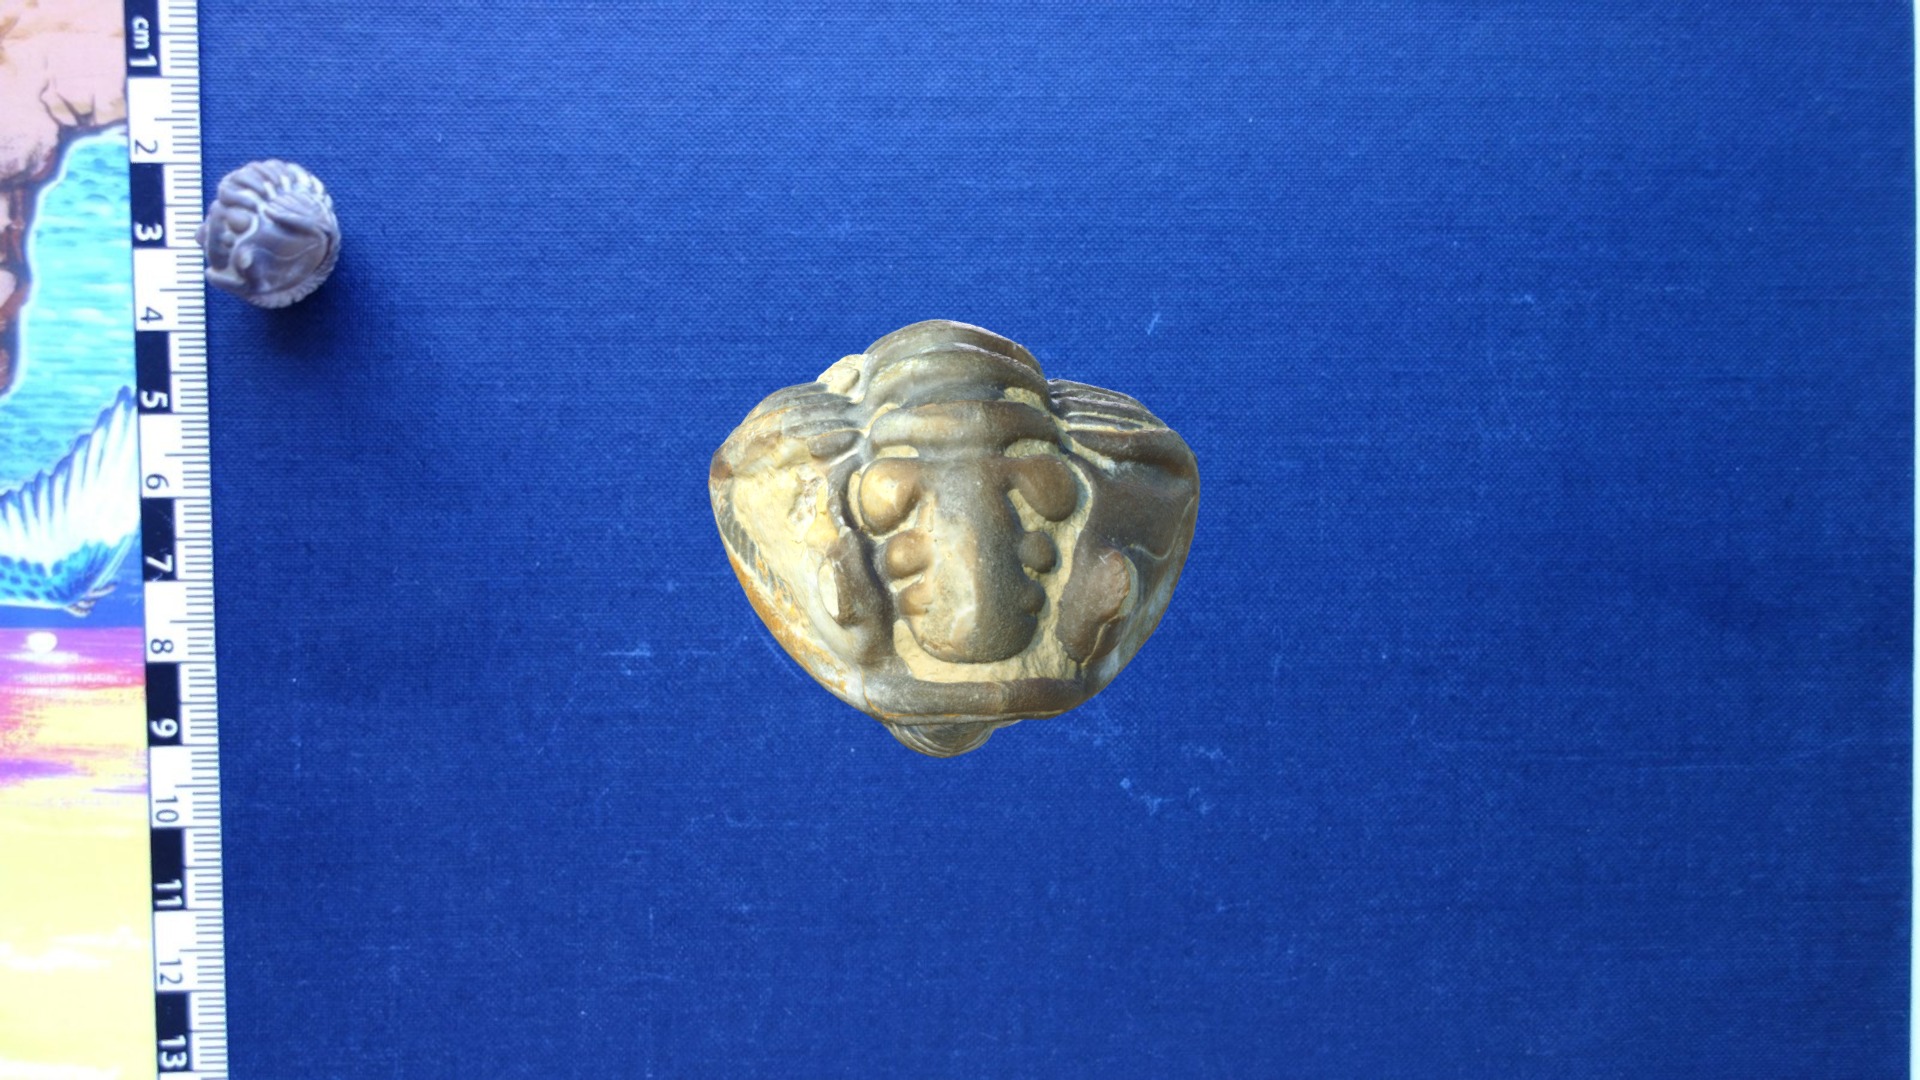 3D model Flexicalymene meeki – enrolled trilobite - This is a 3D model of the Flexicalymene meeki - enrolled trilobite. The 3D model is about a coin on a blue surface.